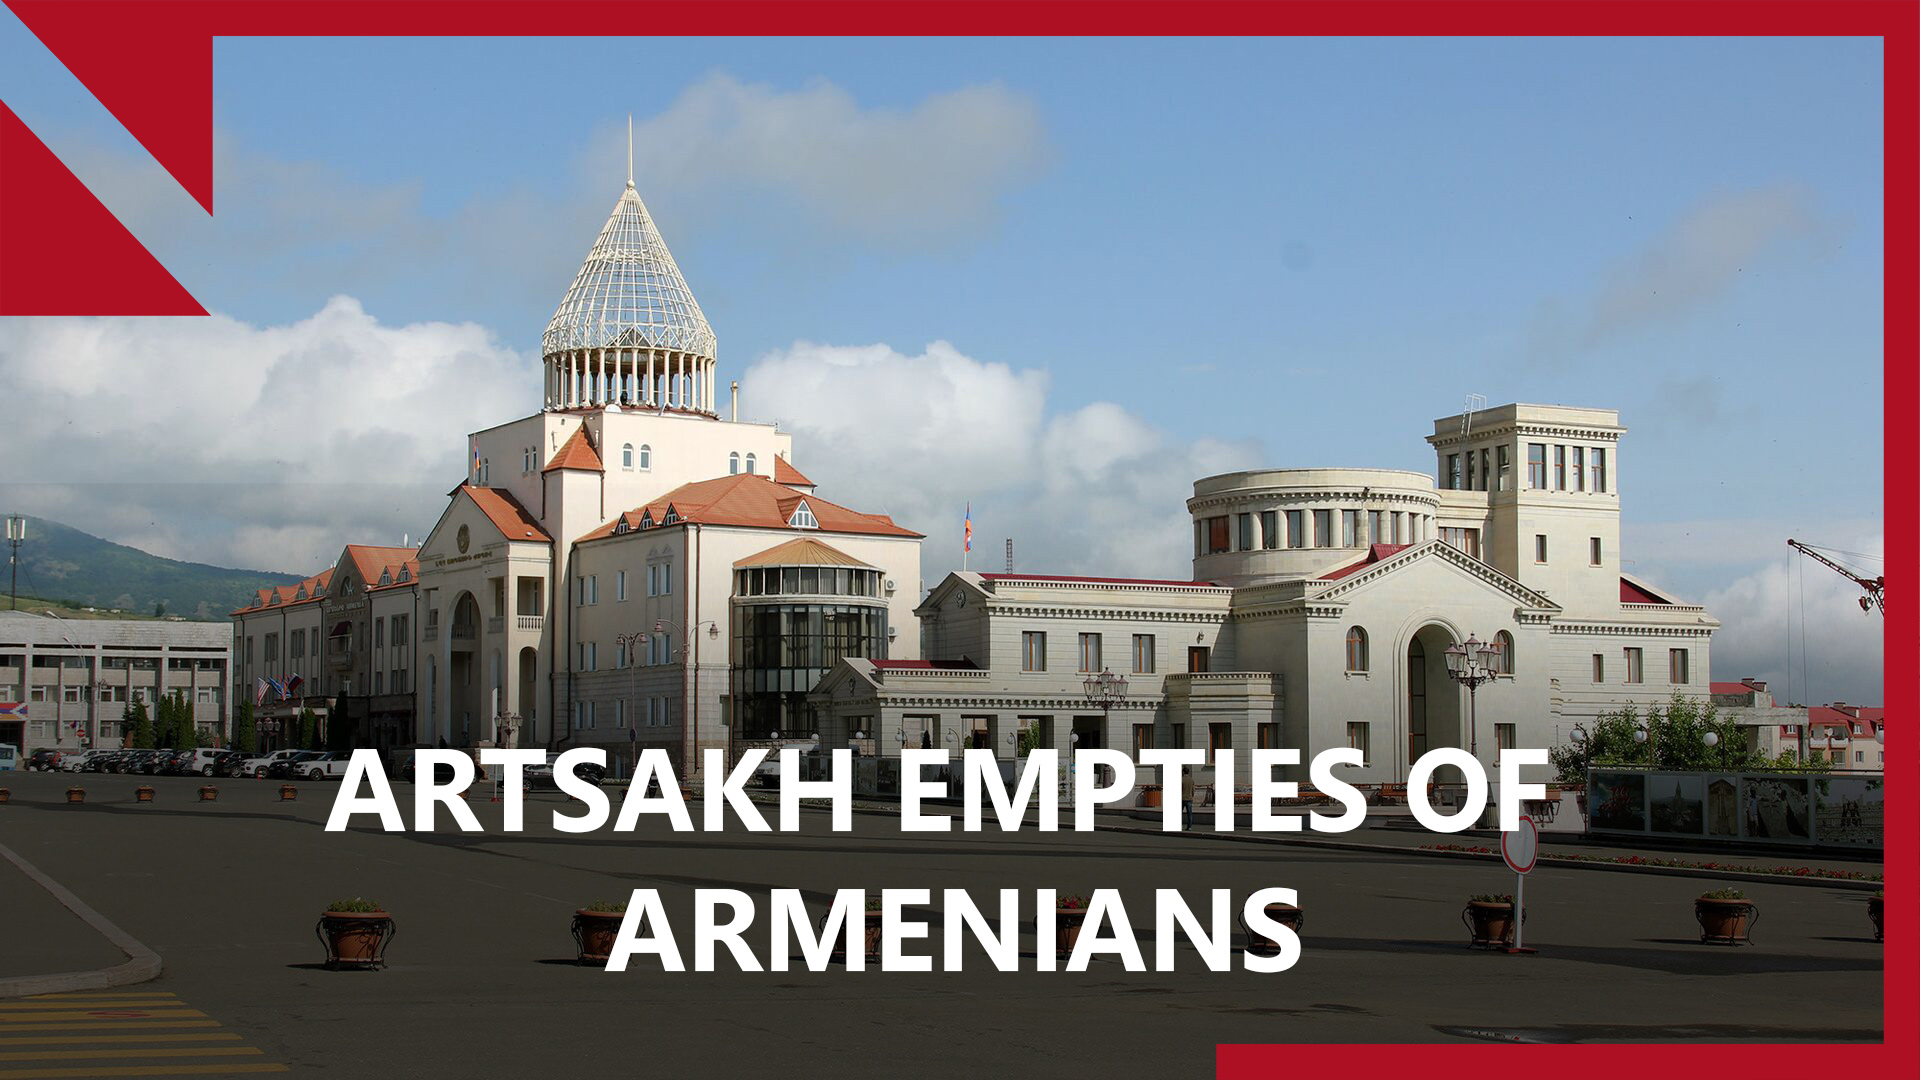 Over 50,000 Karabakh Armenians Have Fled to Armenia